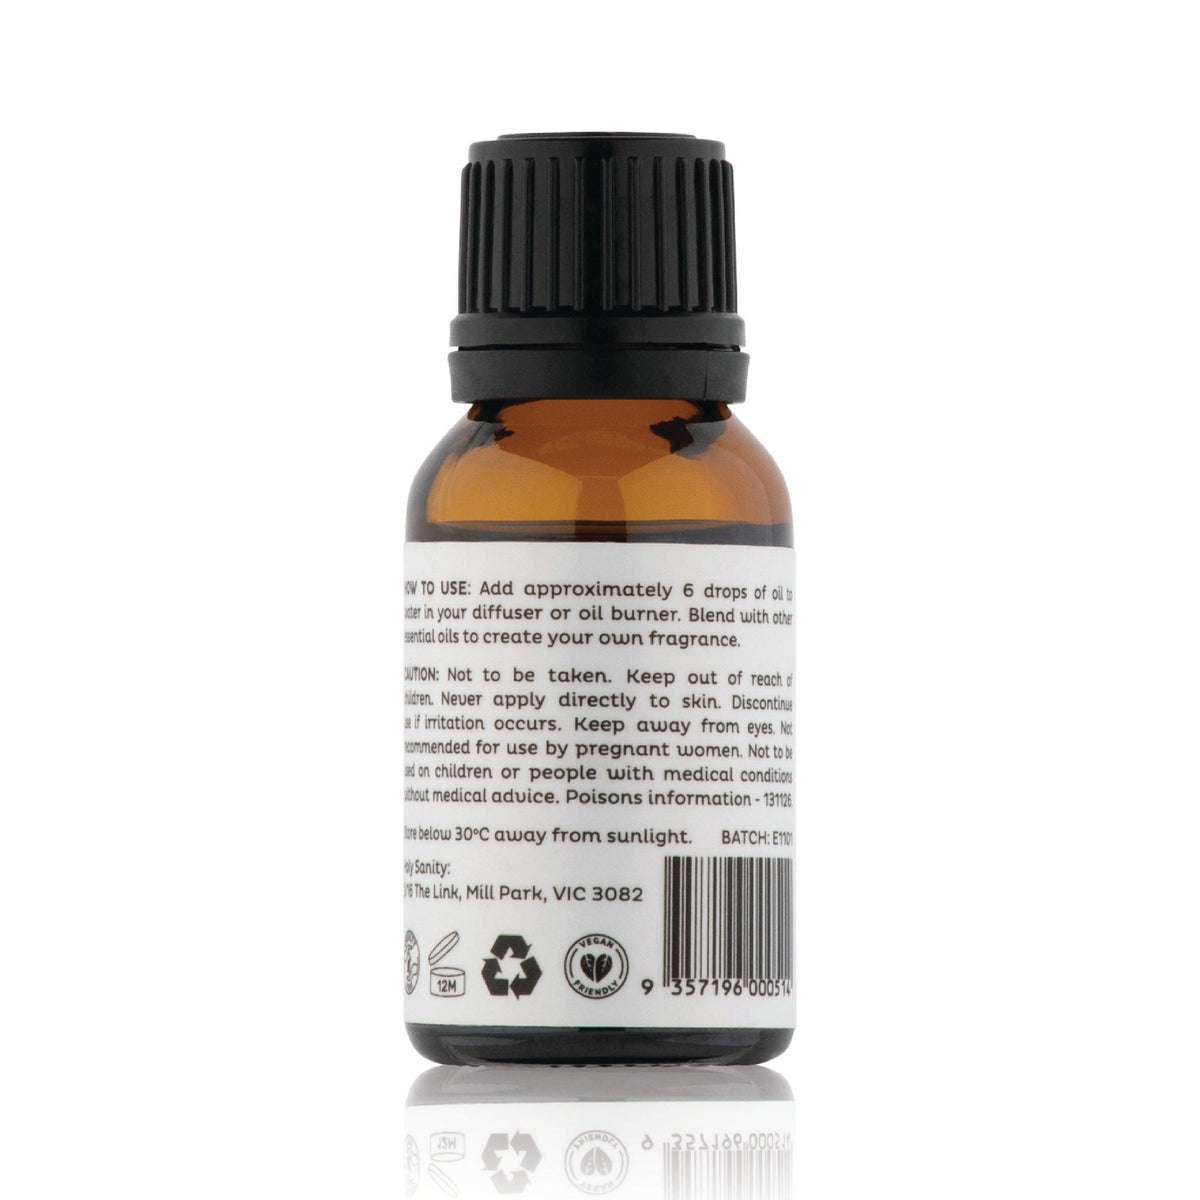 Organic Rosemary Essential Oil (15ml) - Holy Sanity 